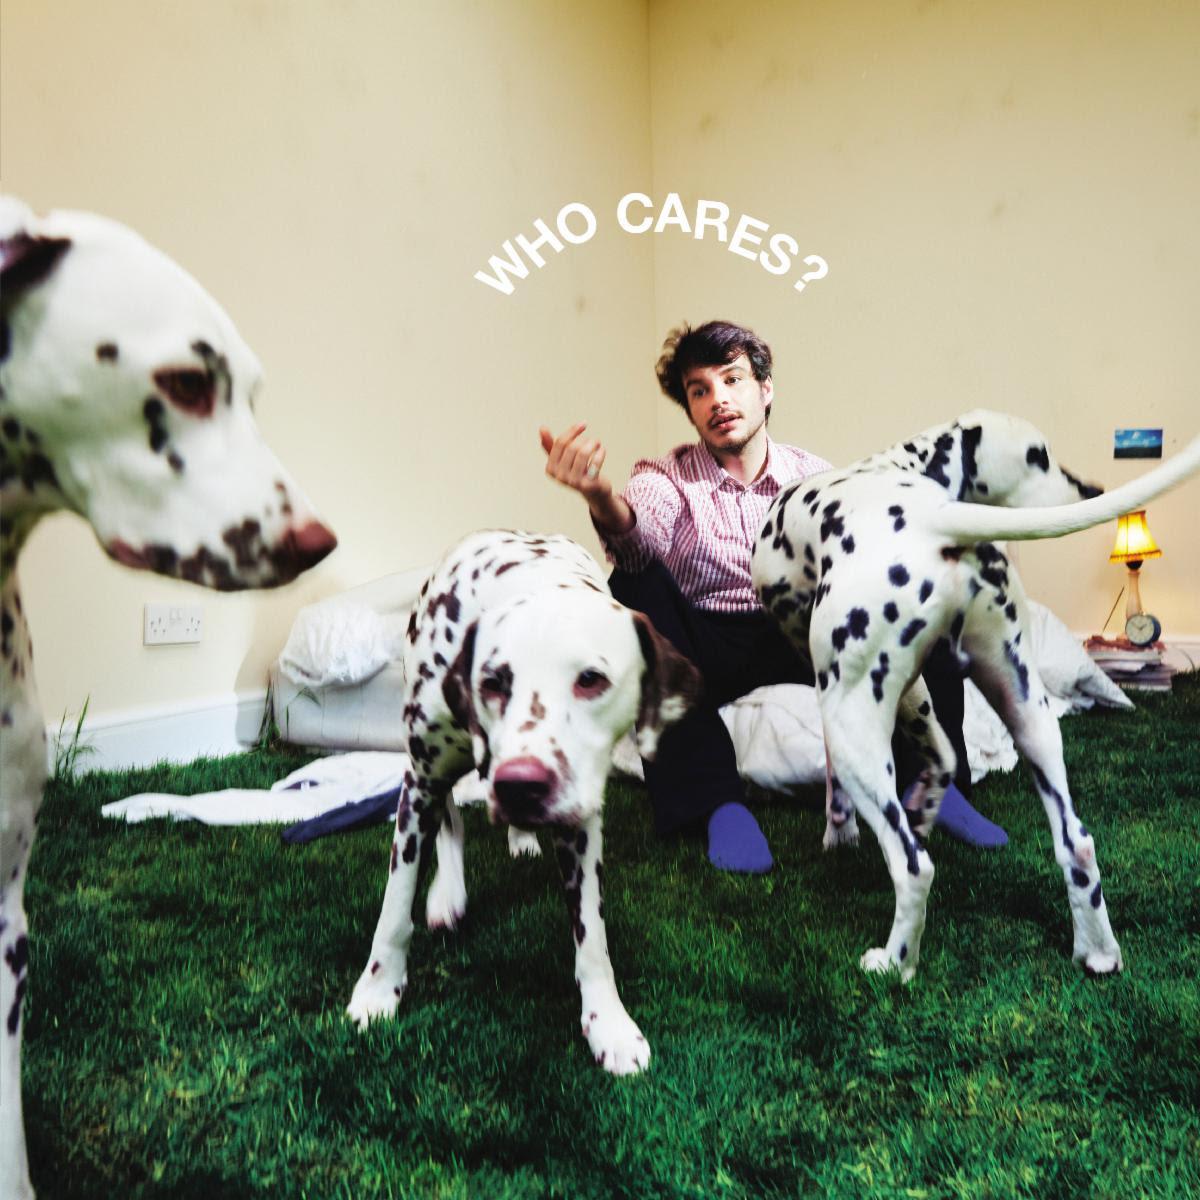 Rex Orange County - Who cares (Art)